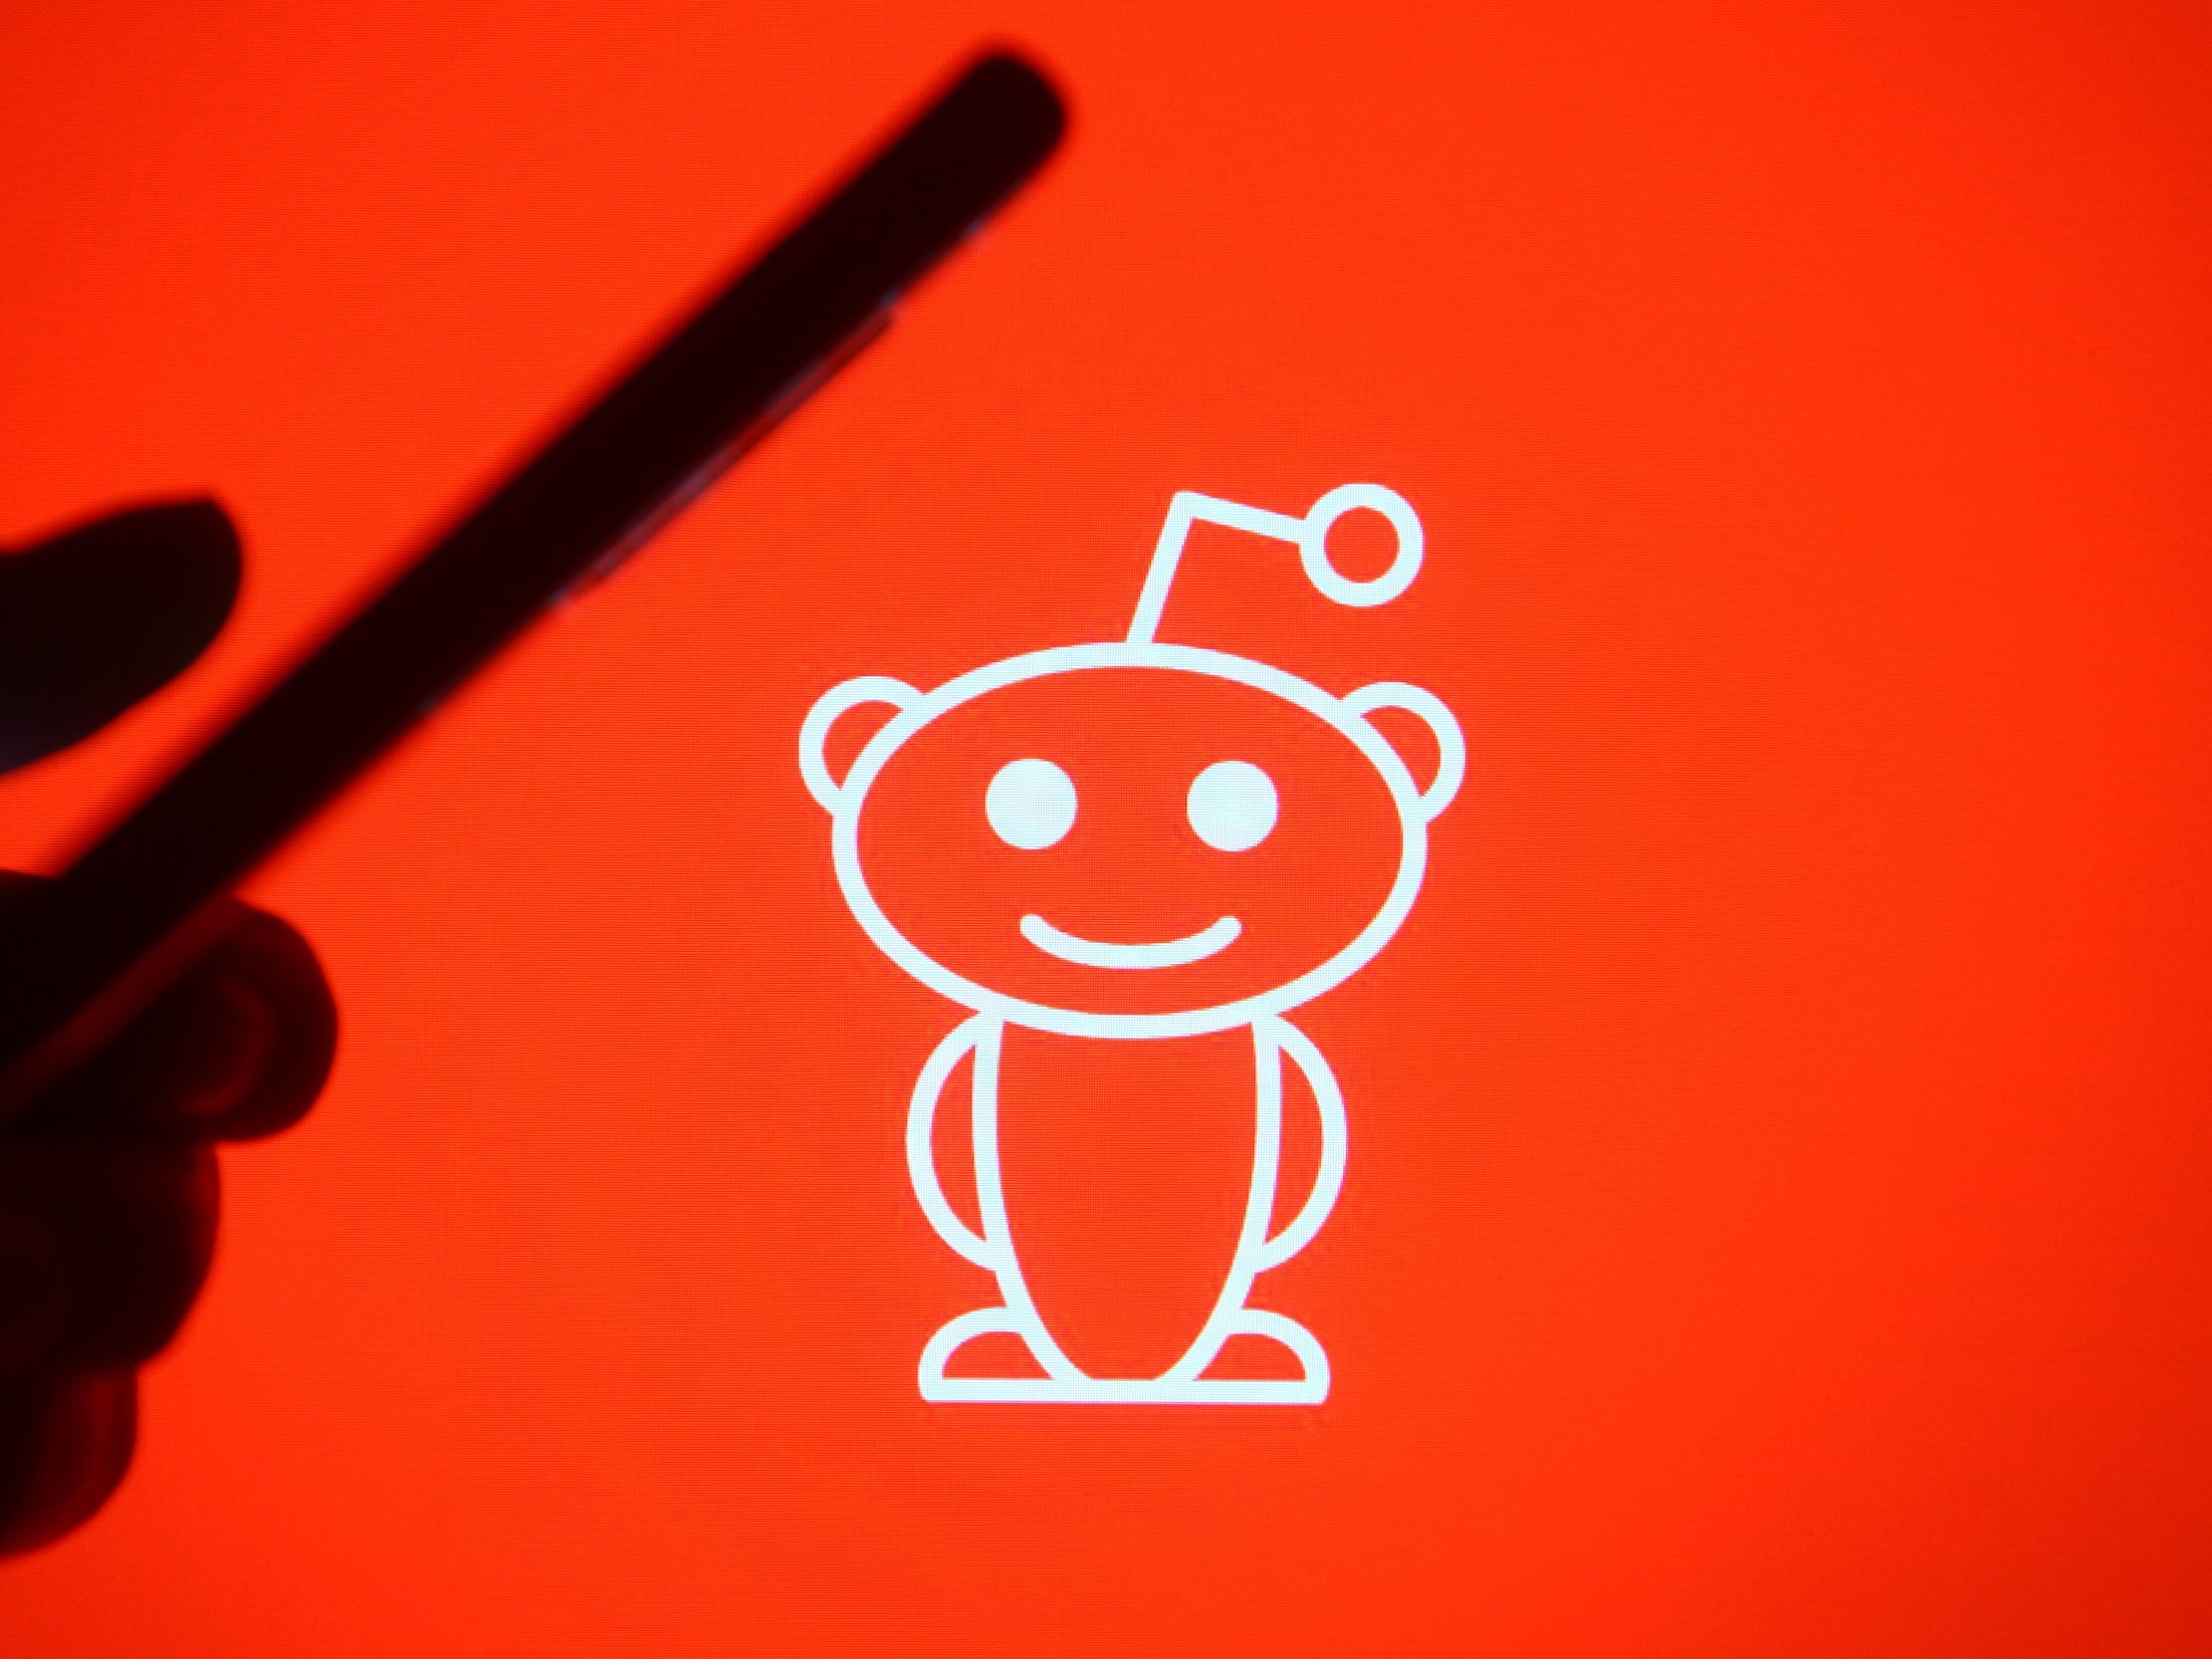 reddit logo with phone